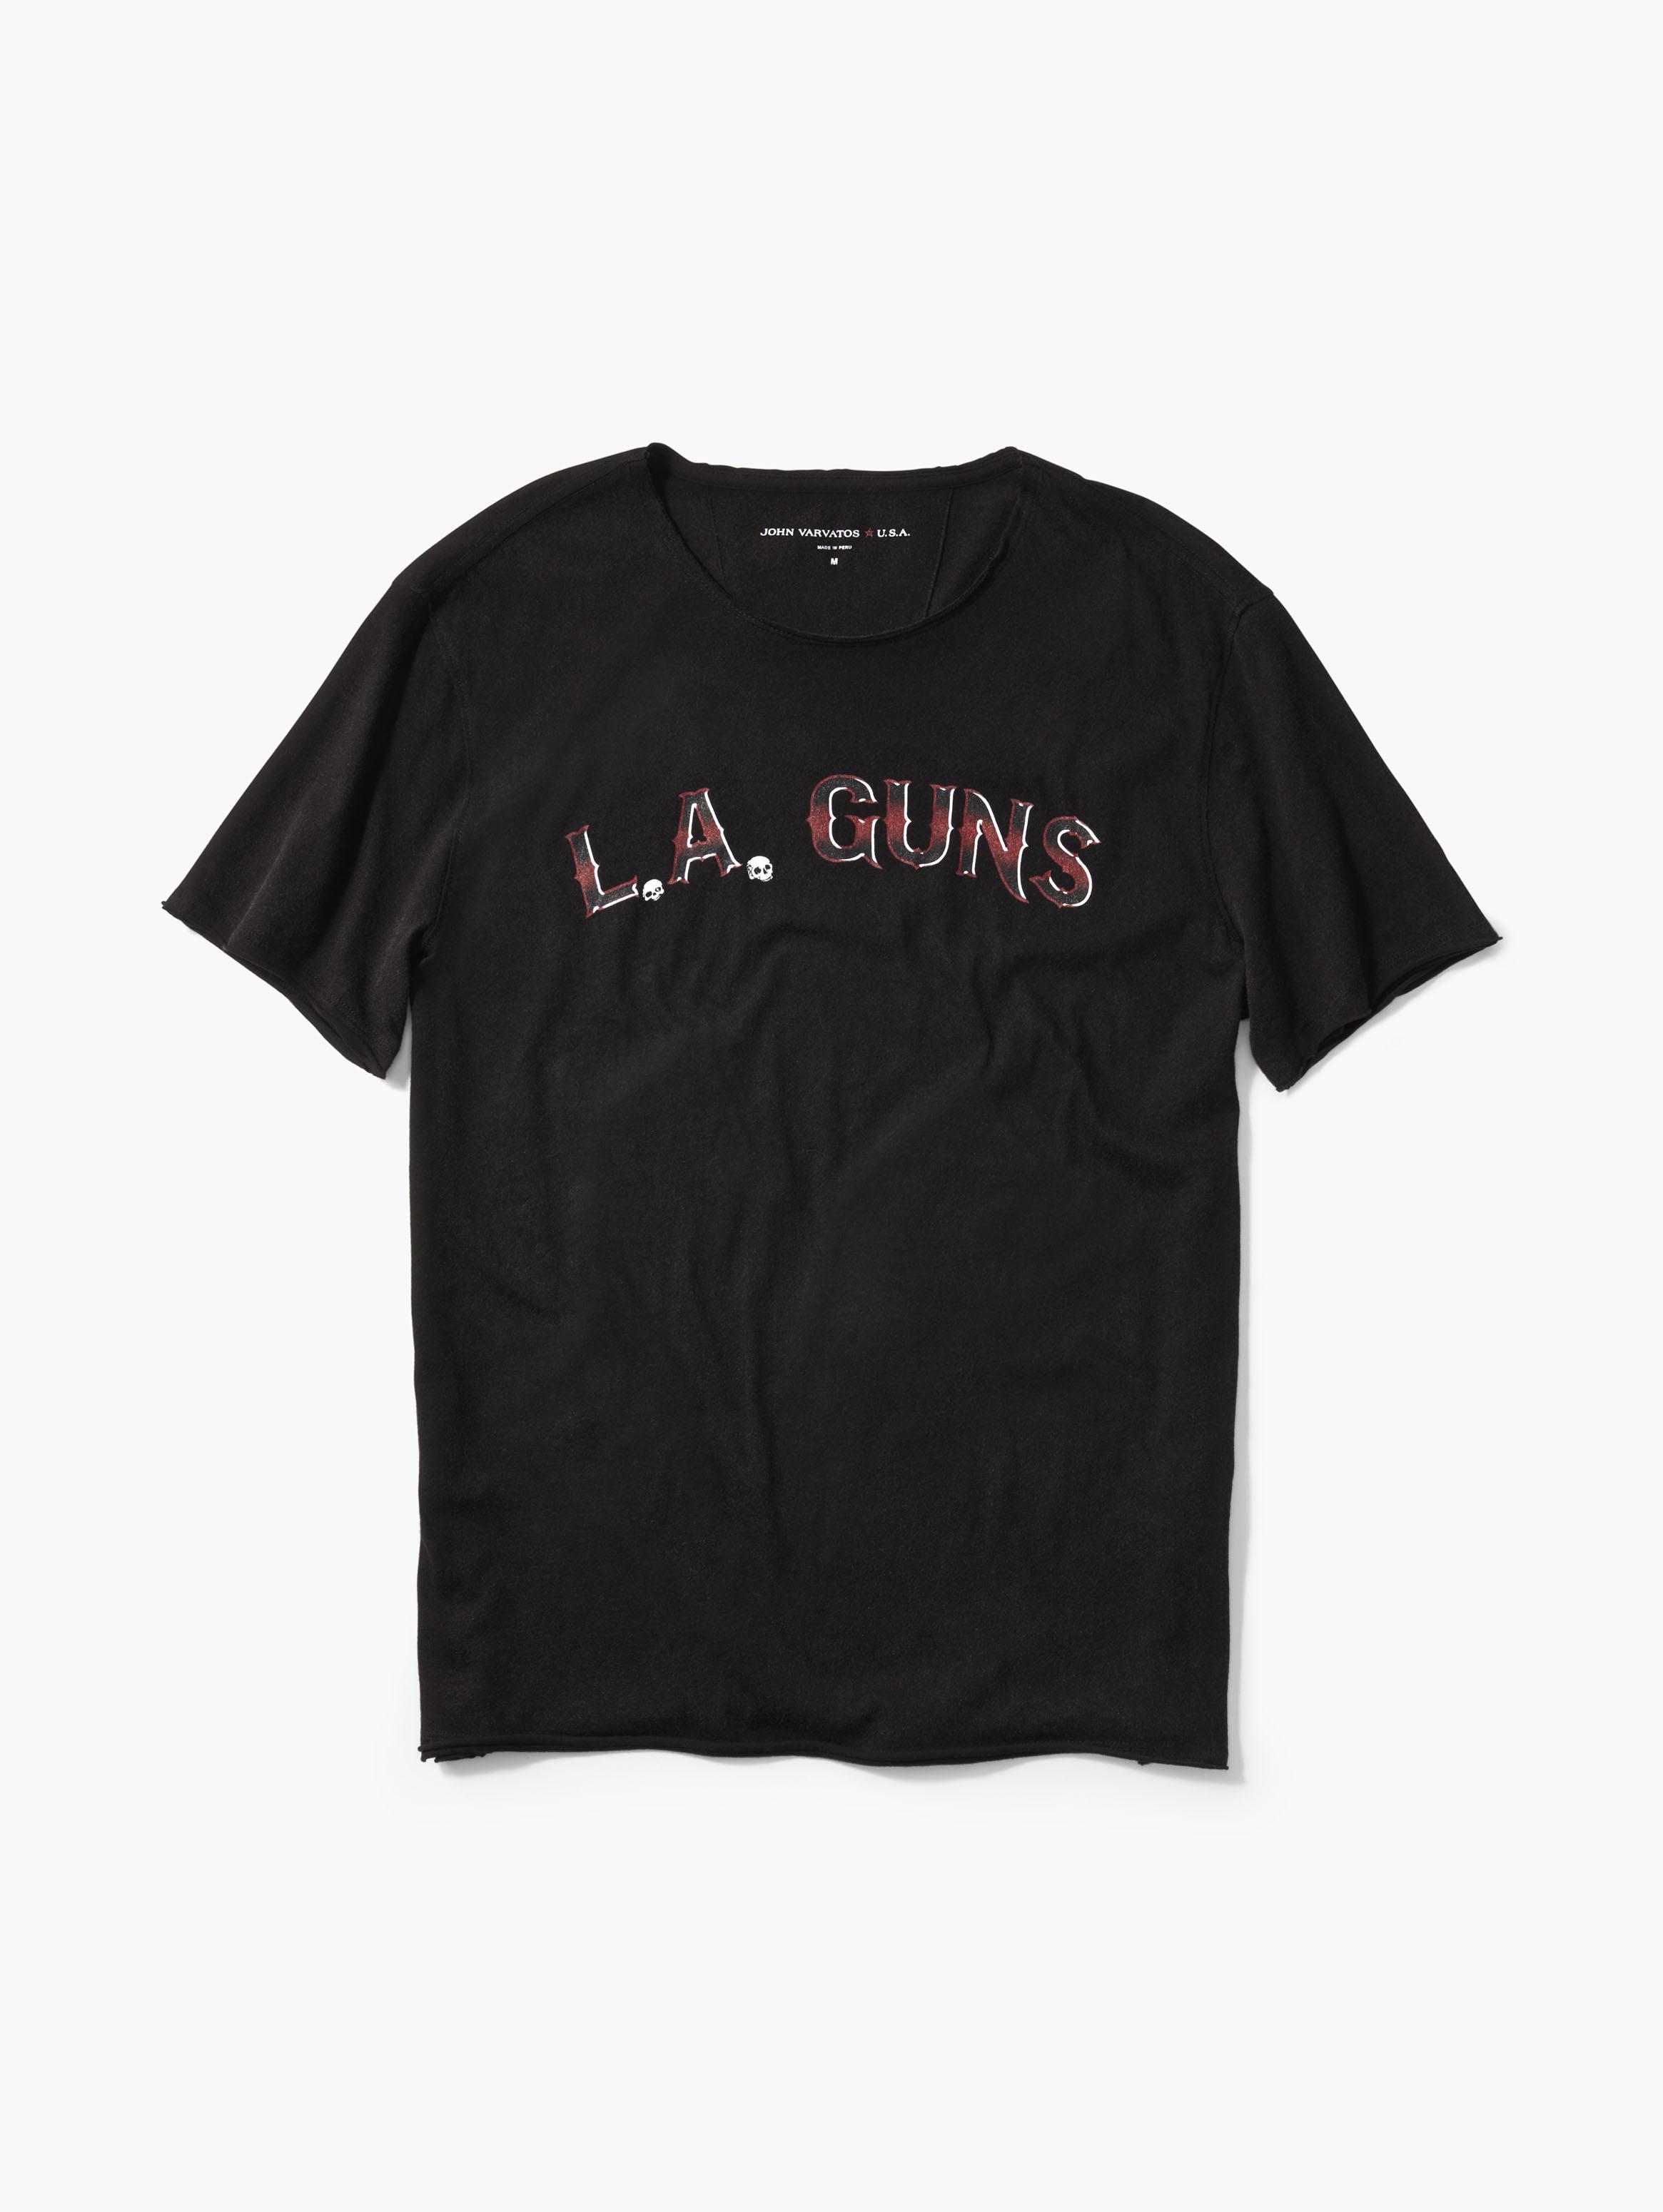 L.A. GUNS TEE image number 1